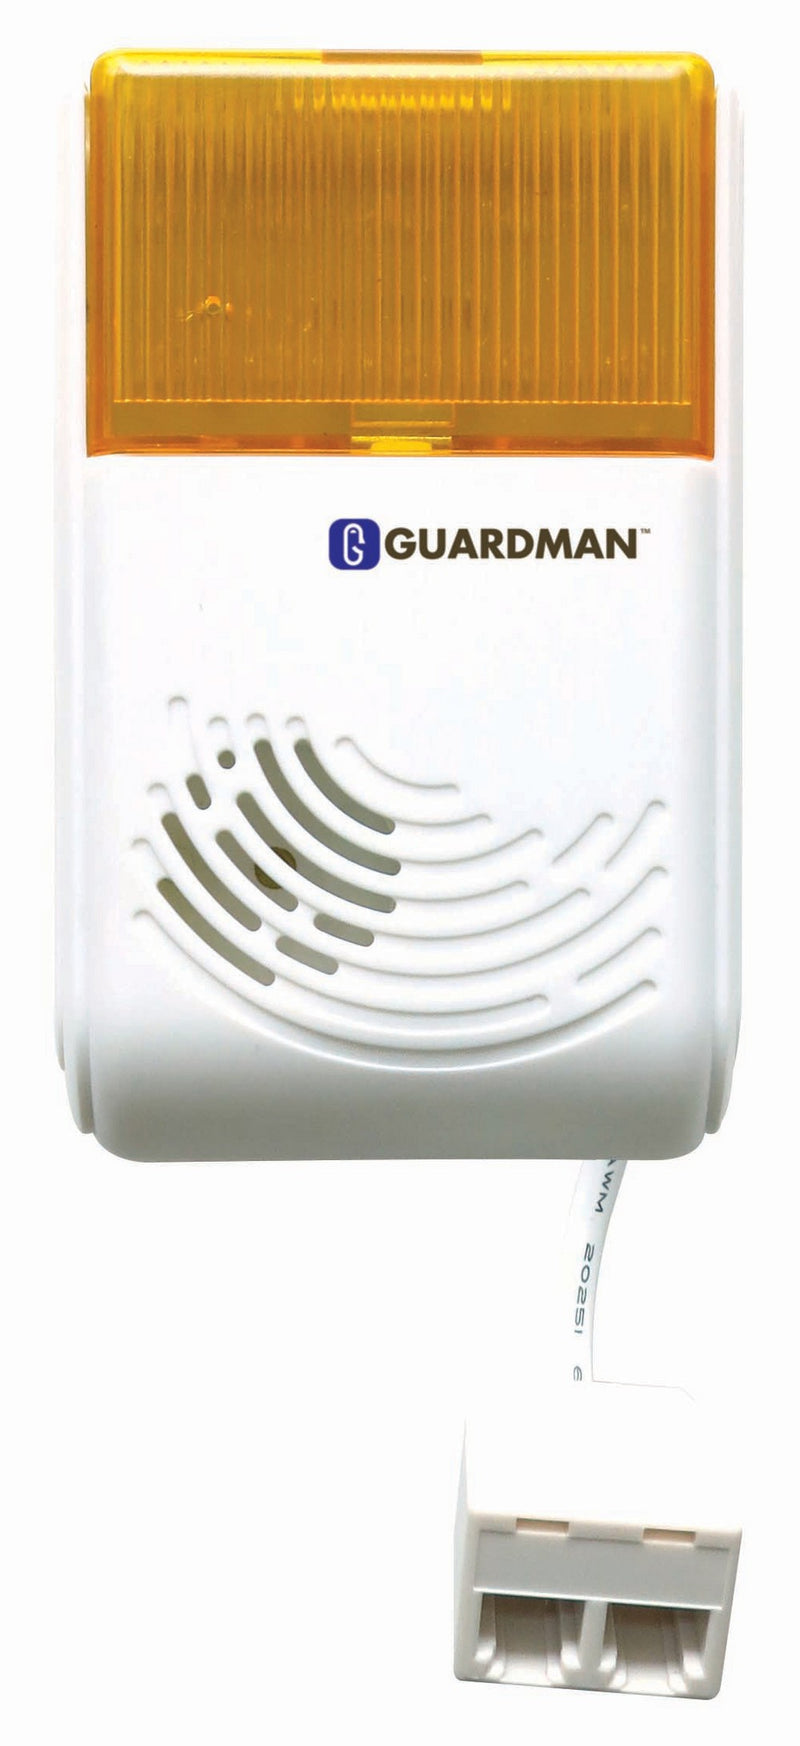 guardman-電話鈴聲放大器  簡單的日常生活輔助品，幫助有聽力障礙或困難的人士，電話來電時將放大電話鈴聲，並出現超亮LED提示燈作提示，特大聲量，高於95分貝，3款音量選擇，毋須電池，可掛牆或立於桌面。